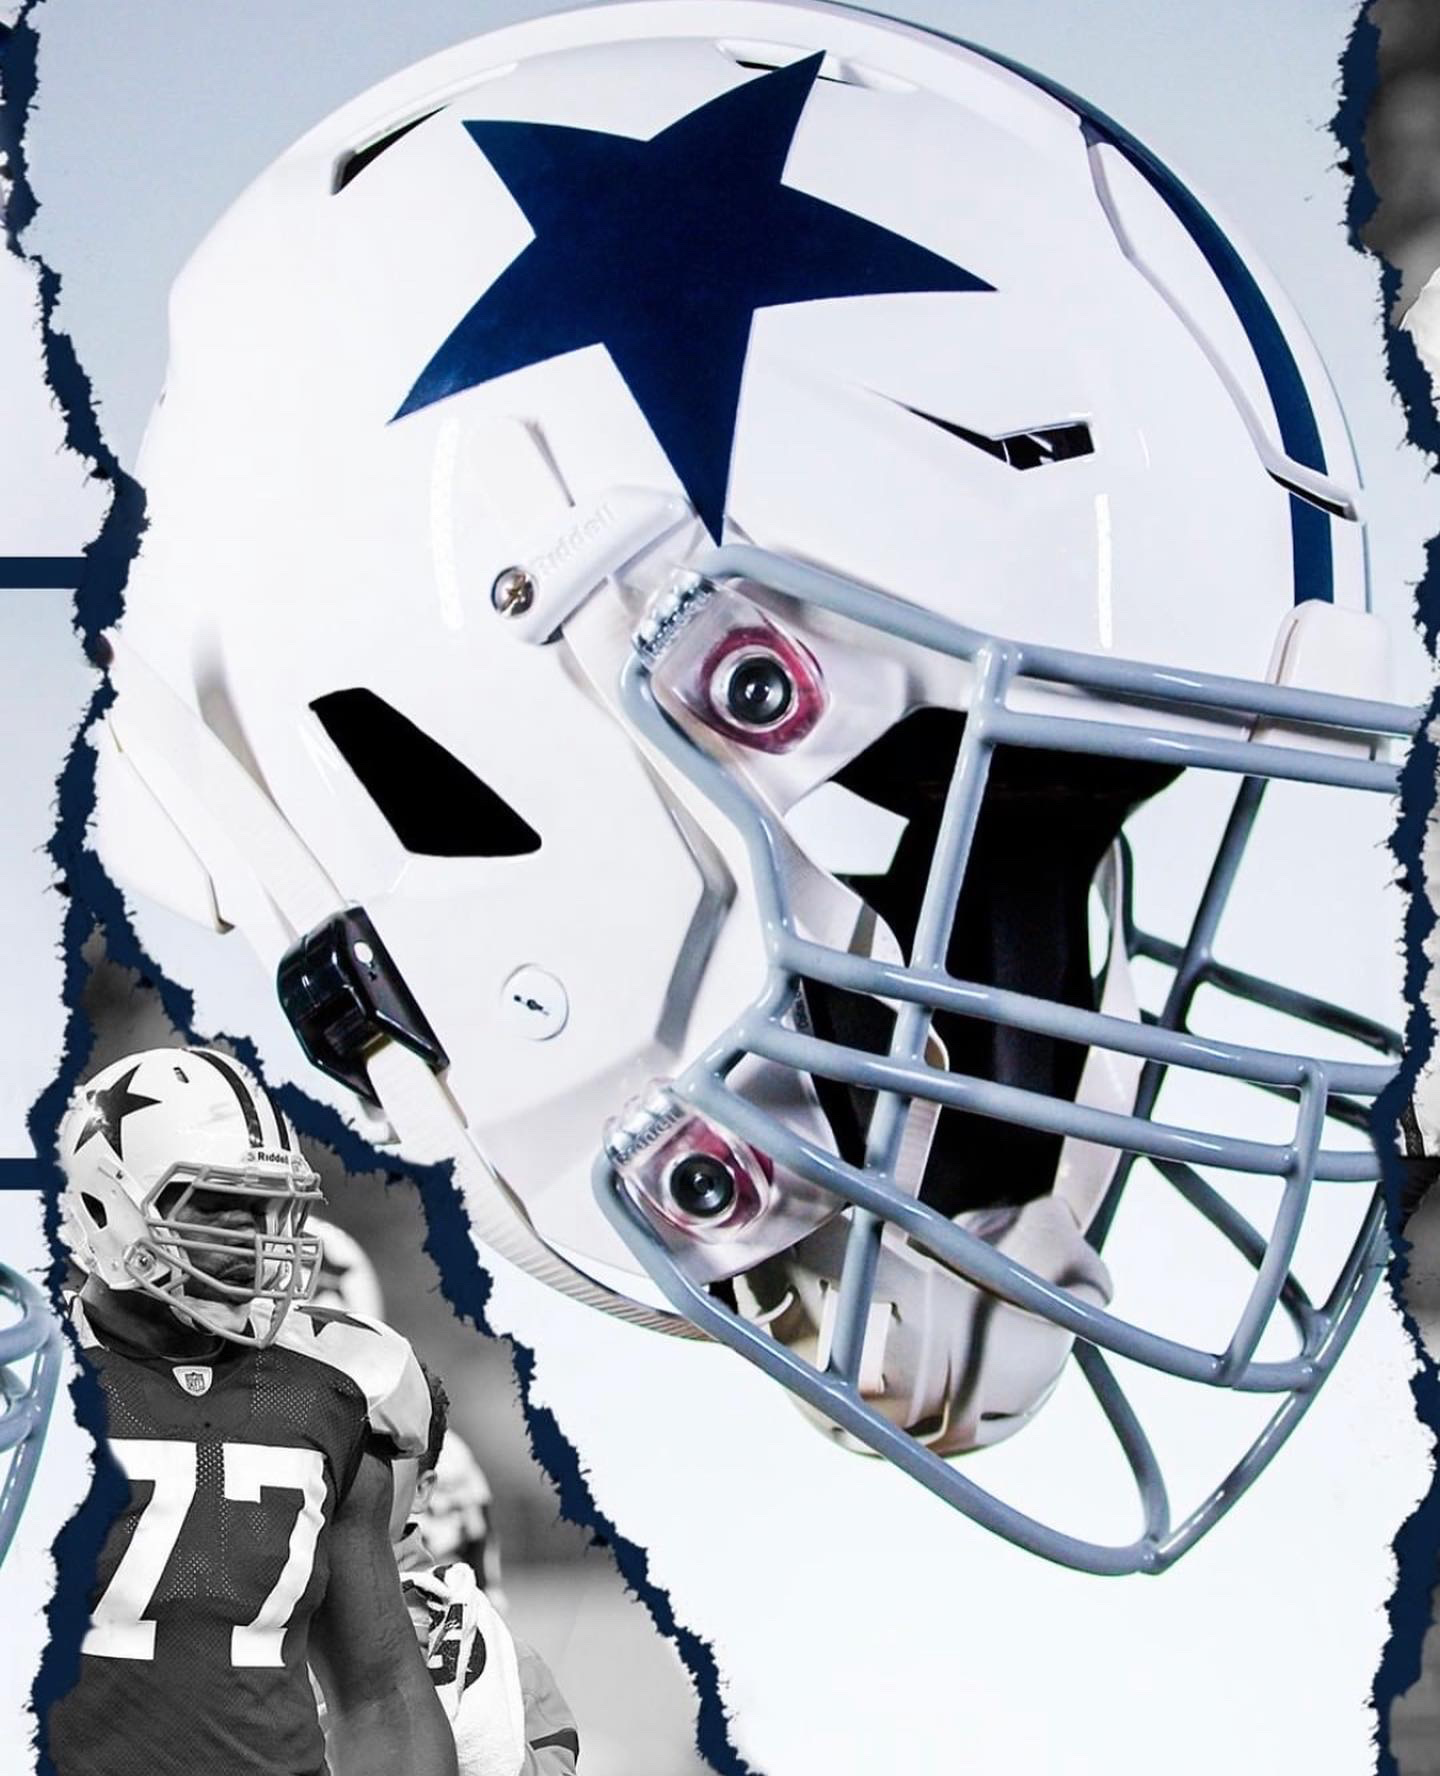 cowboys 2022 alternate helmet